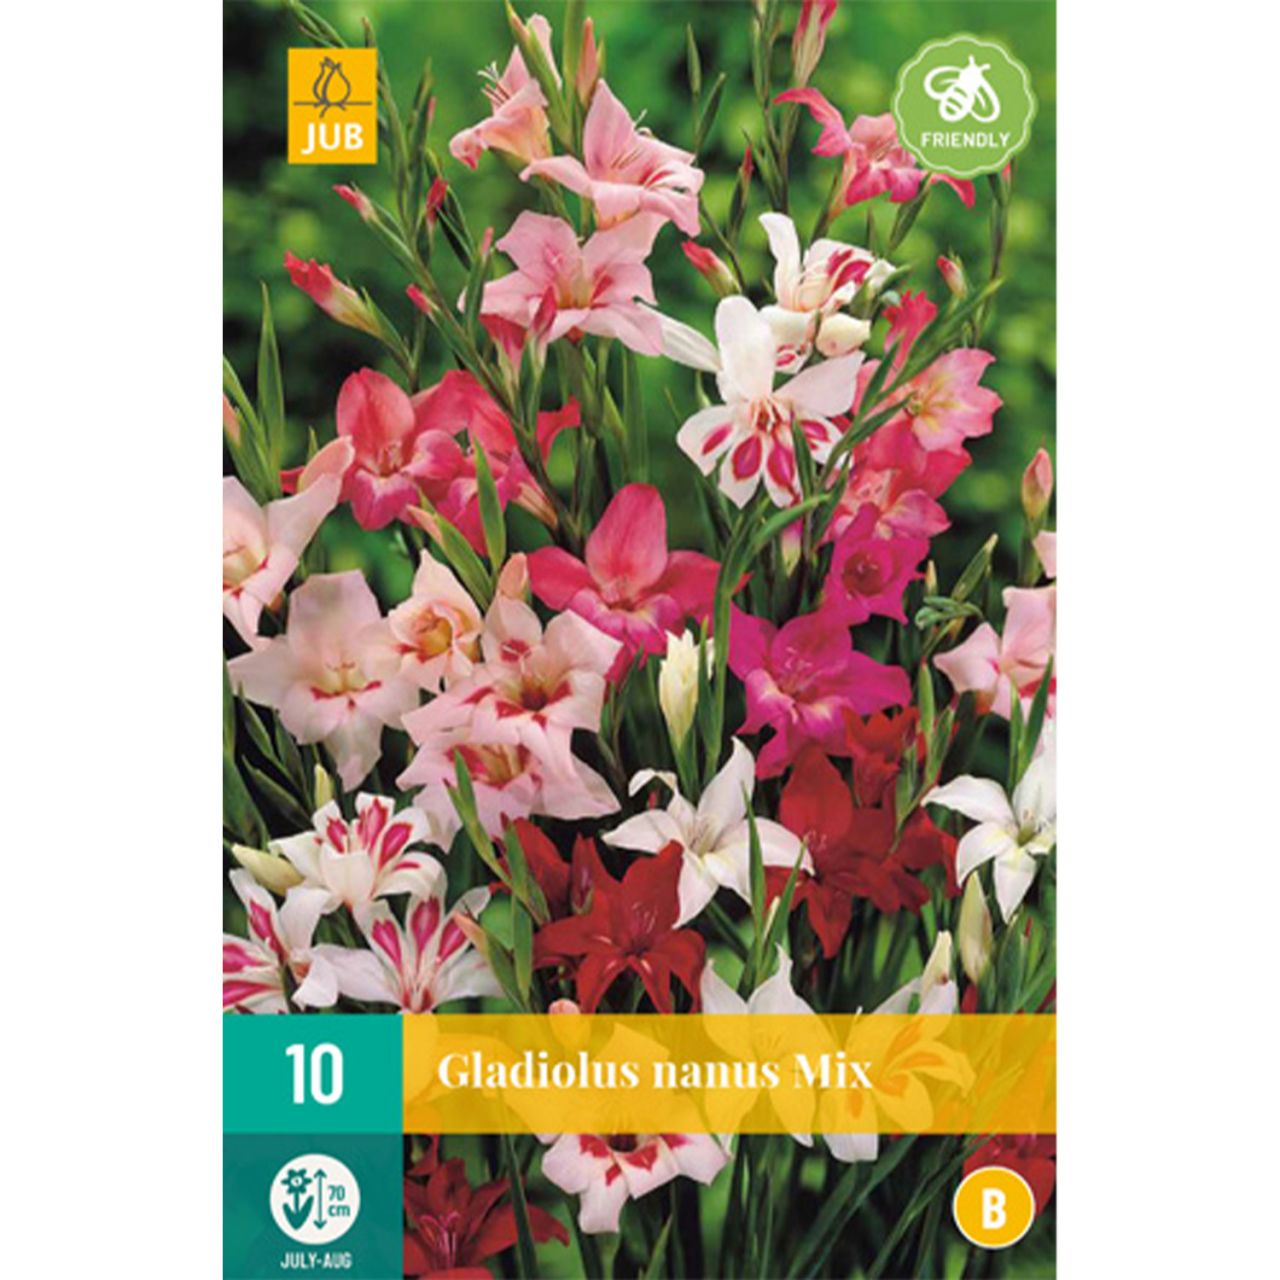 Kategorie <b>Frühlings-Blumenzwiebeln </b> - Gladiole 'Nanus Mix' - 10 Stück - Gladiolus